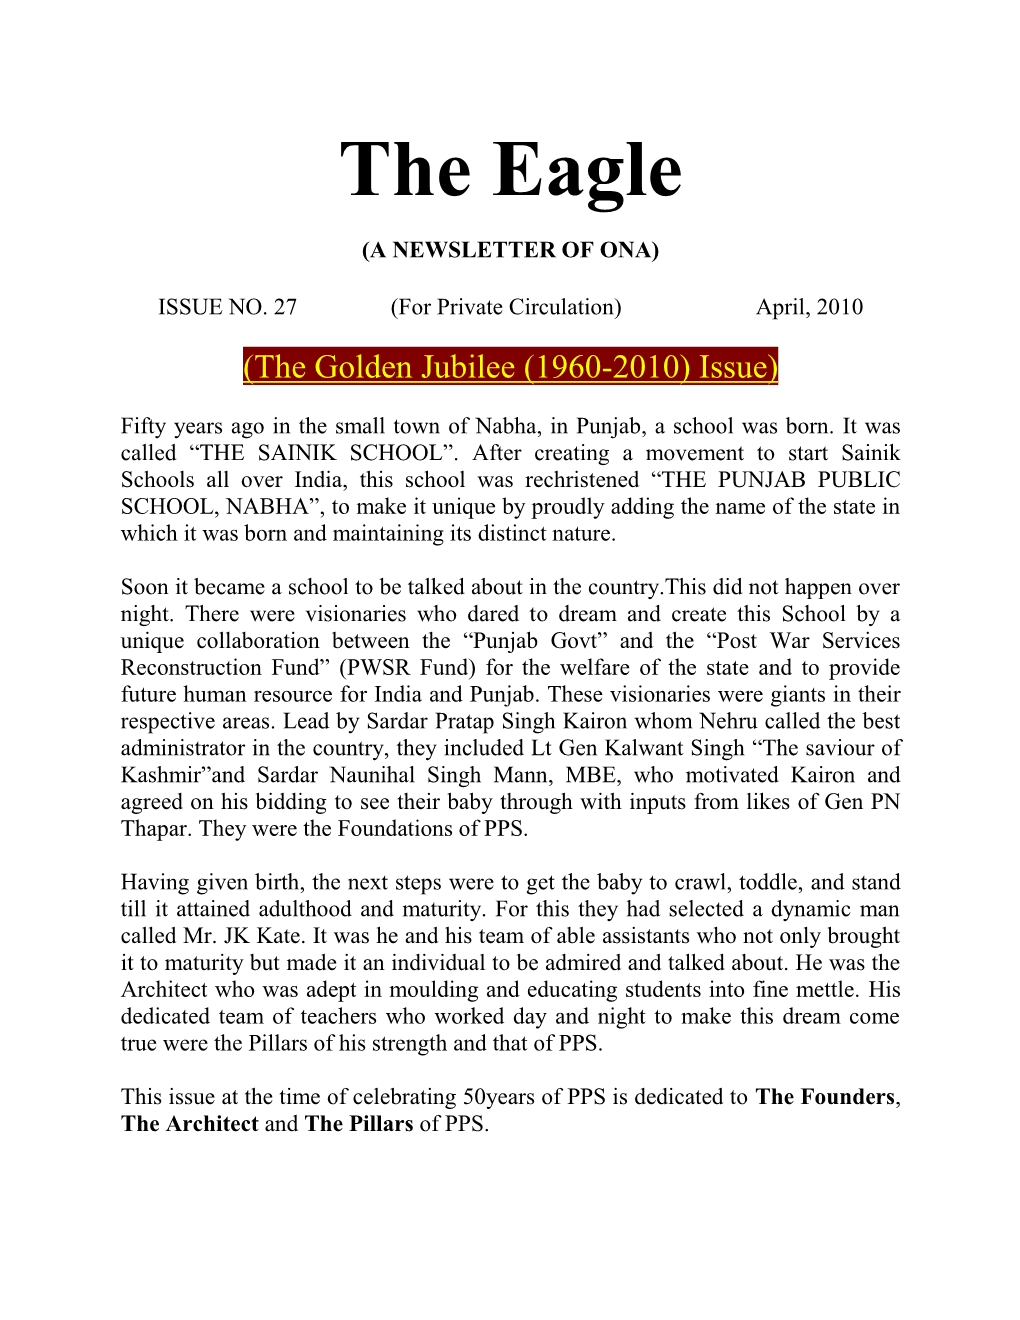 The Eagle – April 2010 Part 1 Golden Jubilee